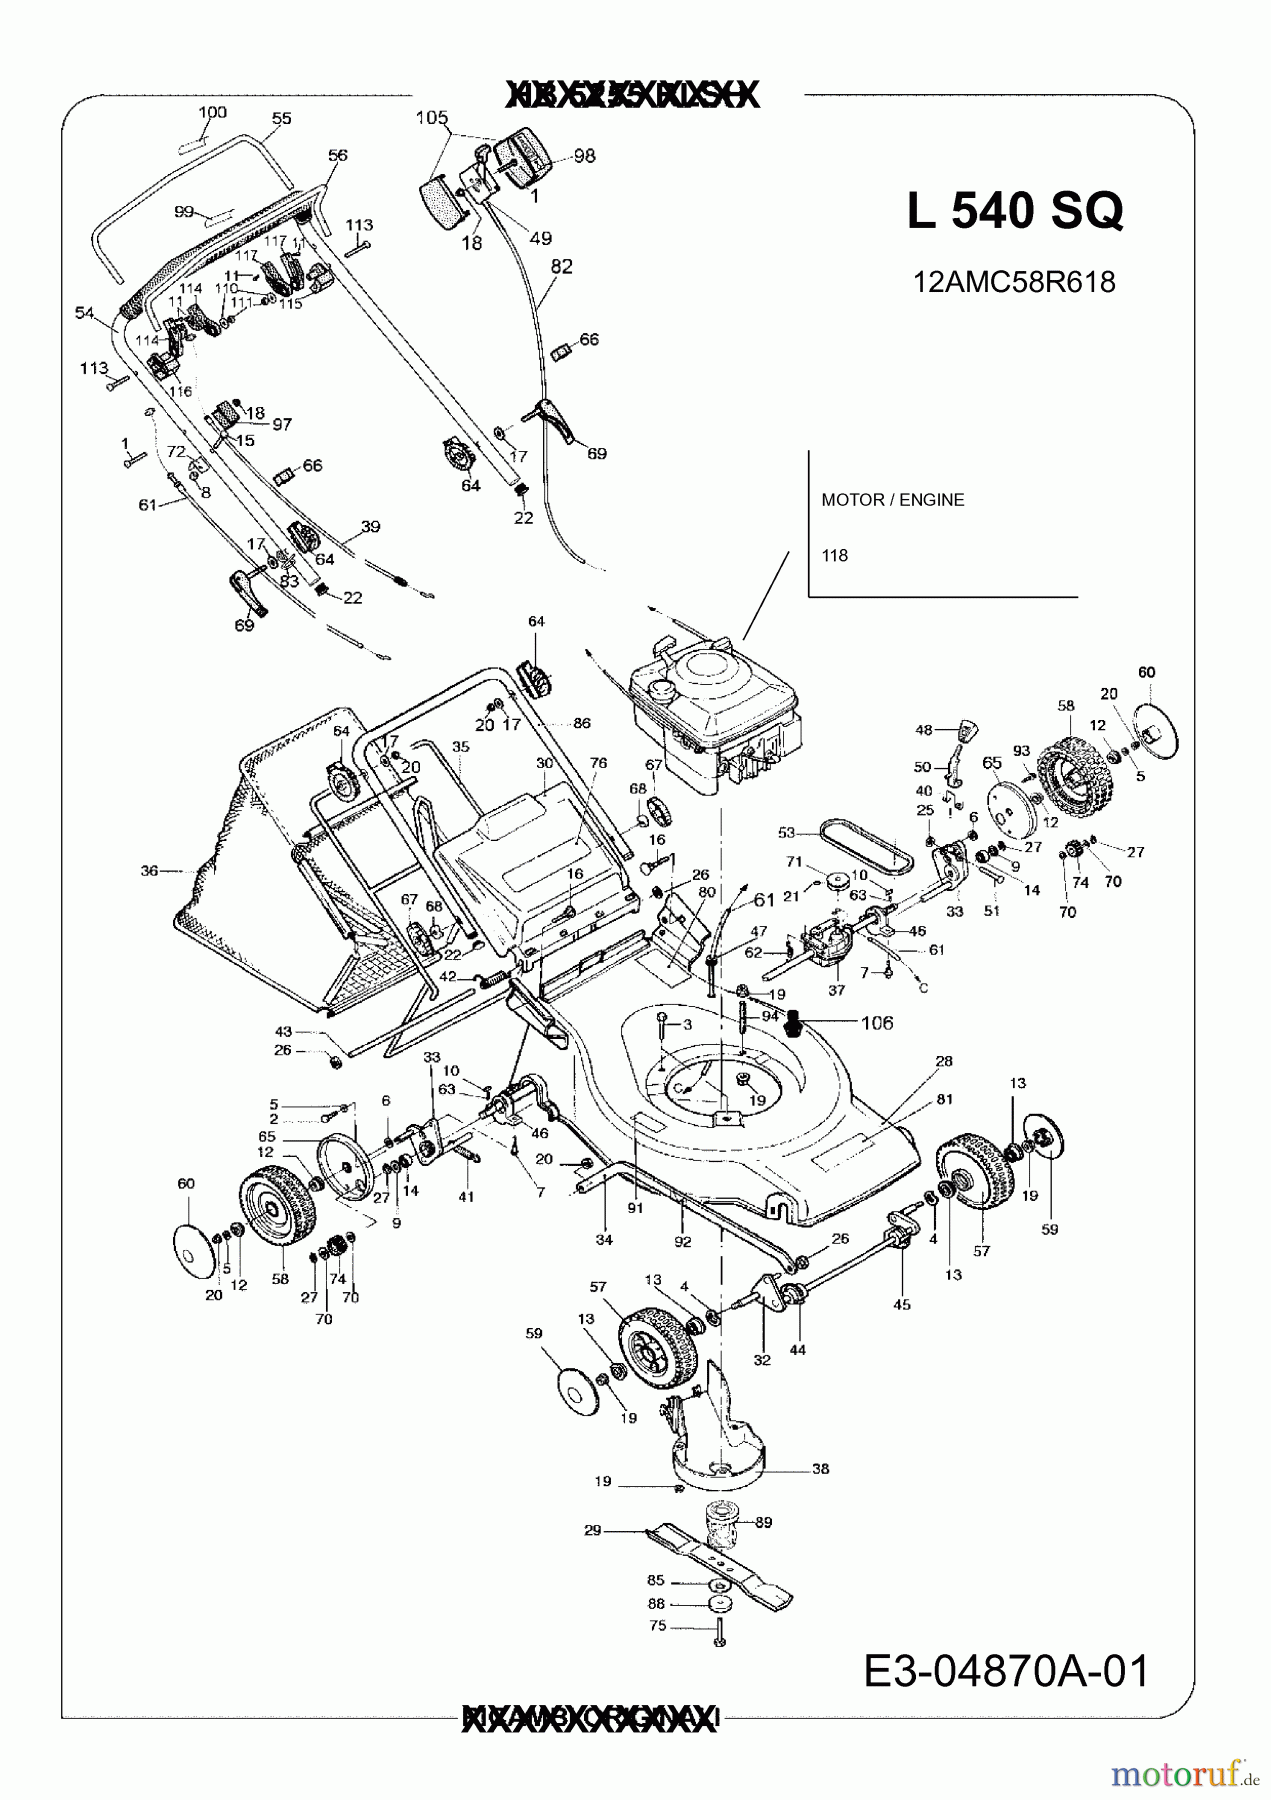  Juwel Motormäher mit Antrieb L 540 SQ 12AMC58R618  (2009) Grundgerät